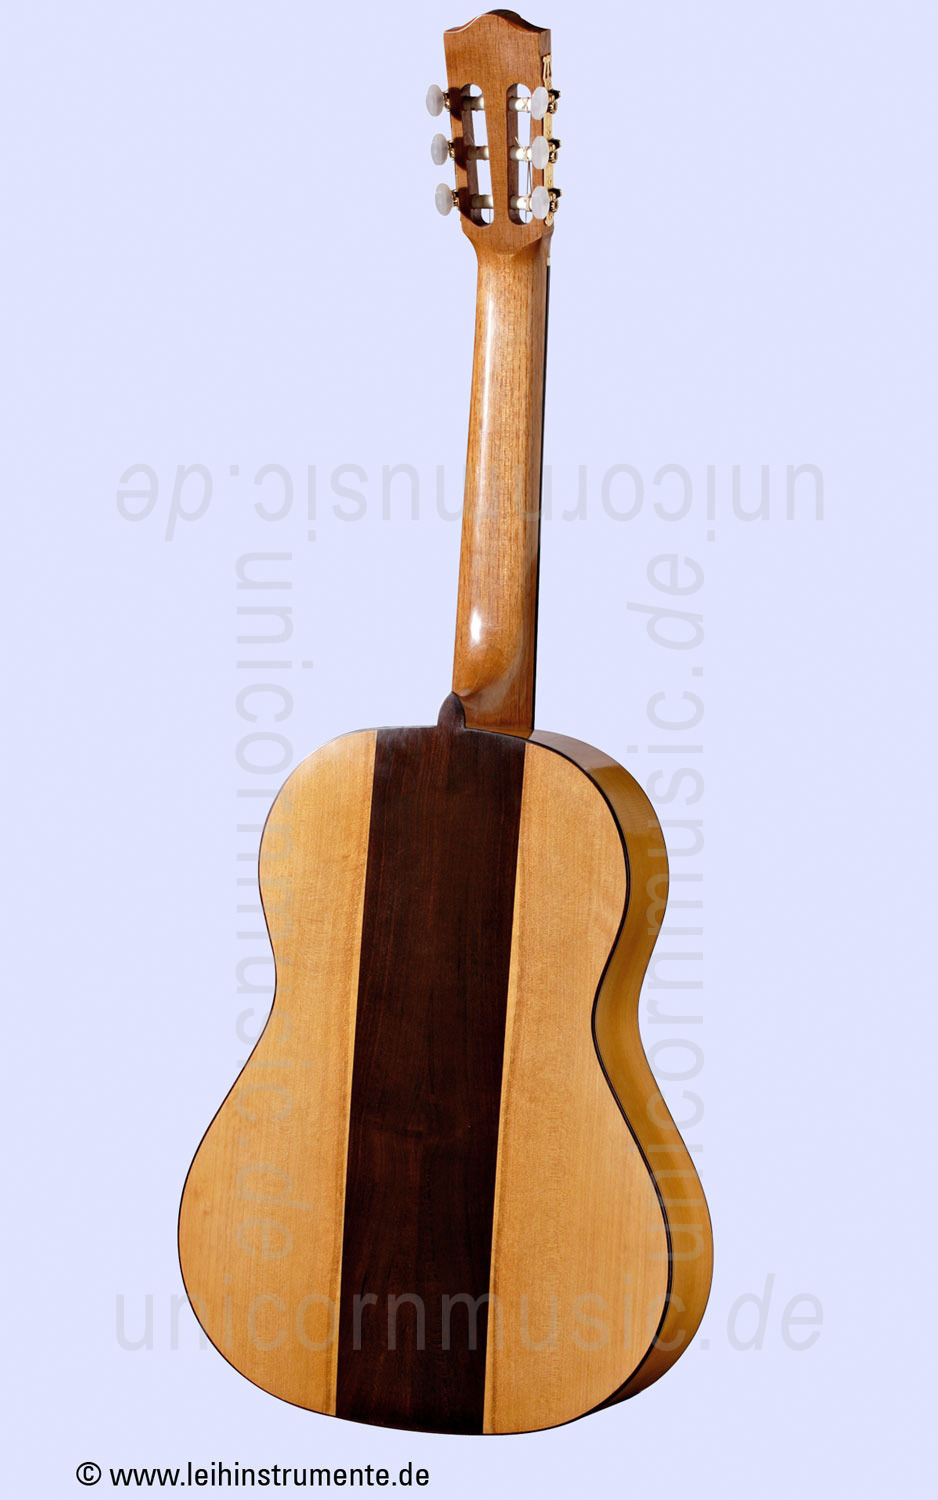 to article description / price Flamenco Guitar FRANZ BUTSCHER - Schellack hand polish (French polish) - all solid